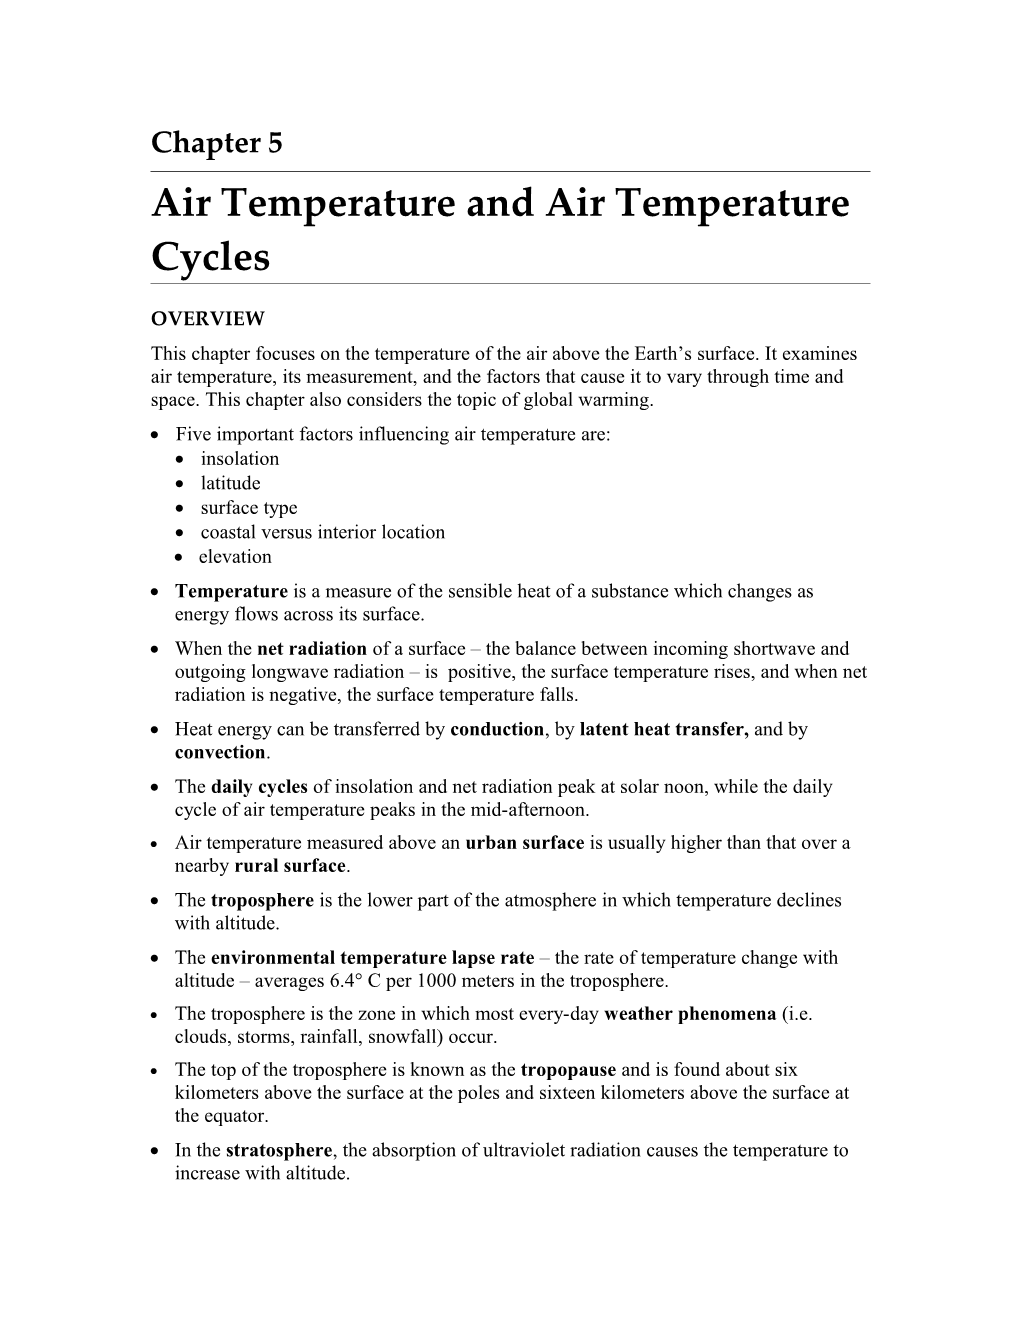 Air Temperature and Air Temperature Cycles